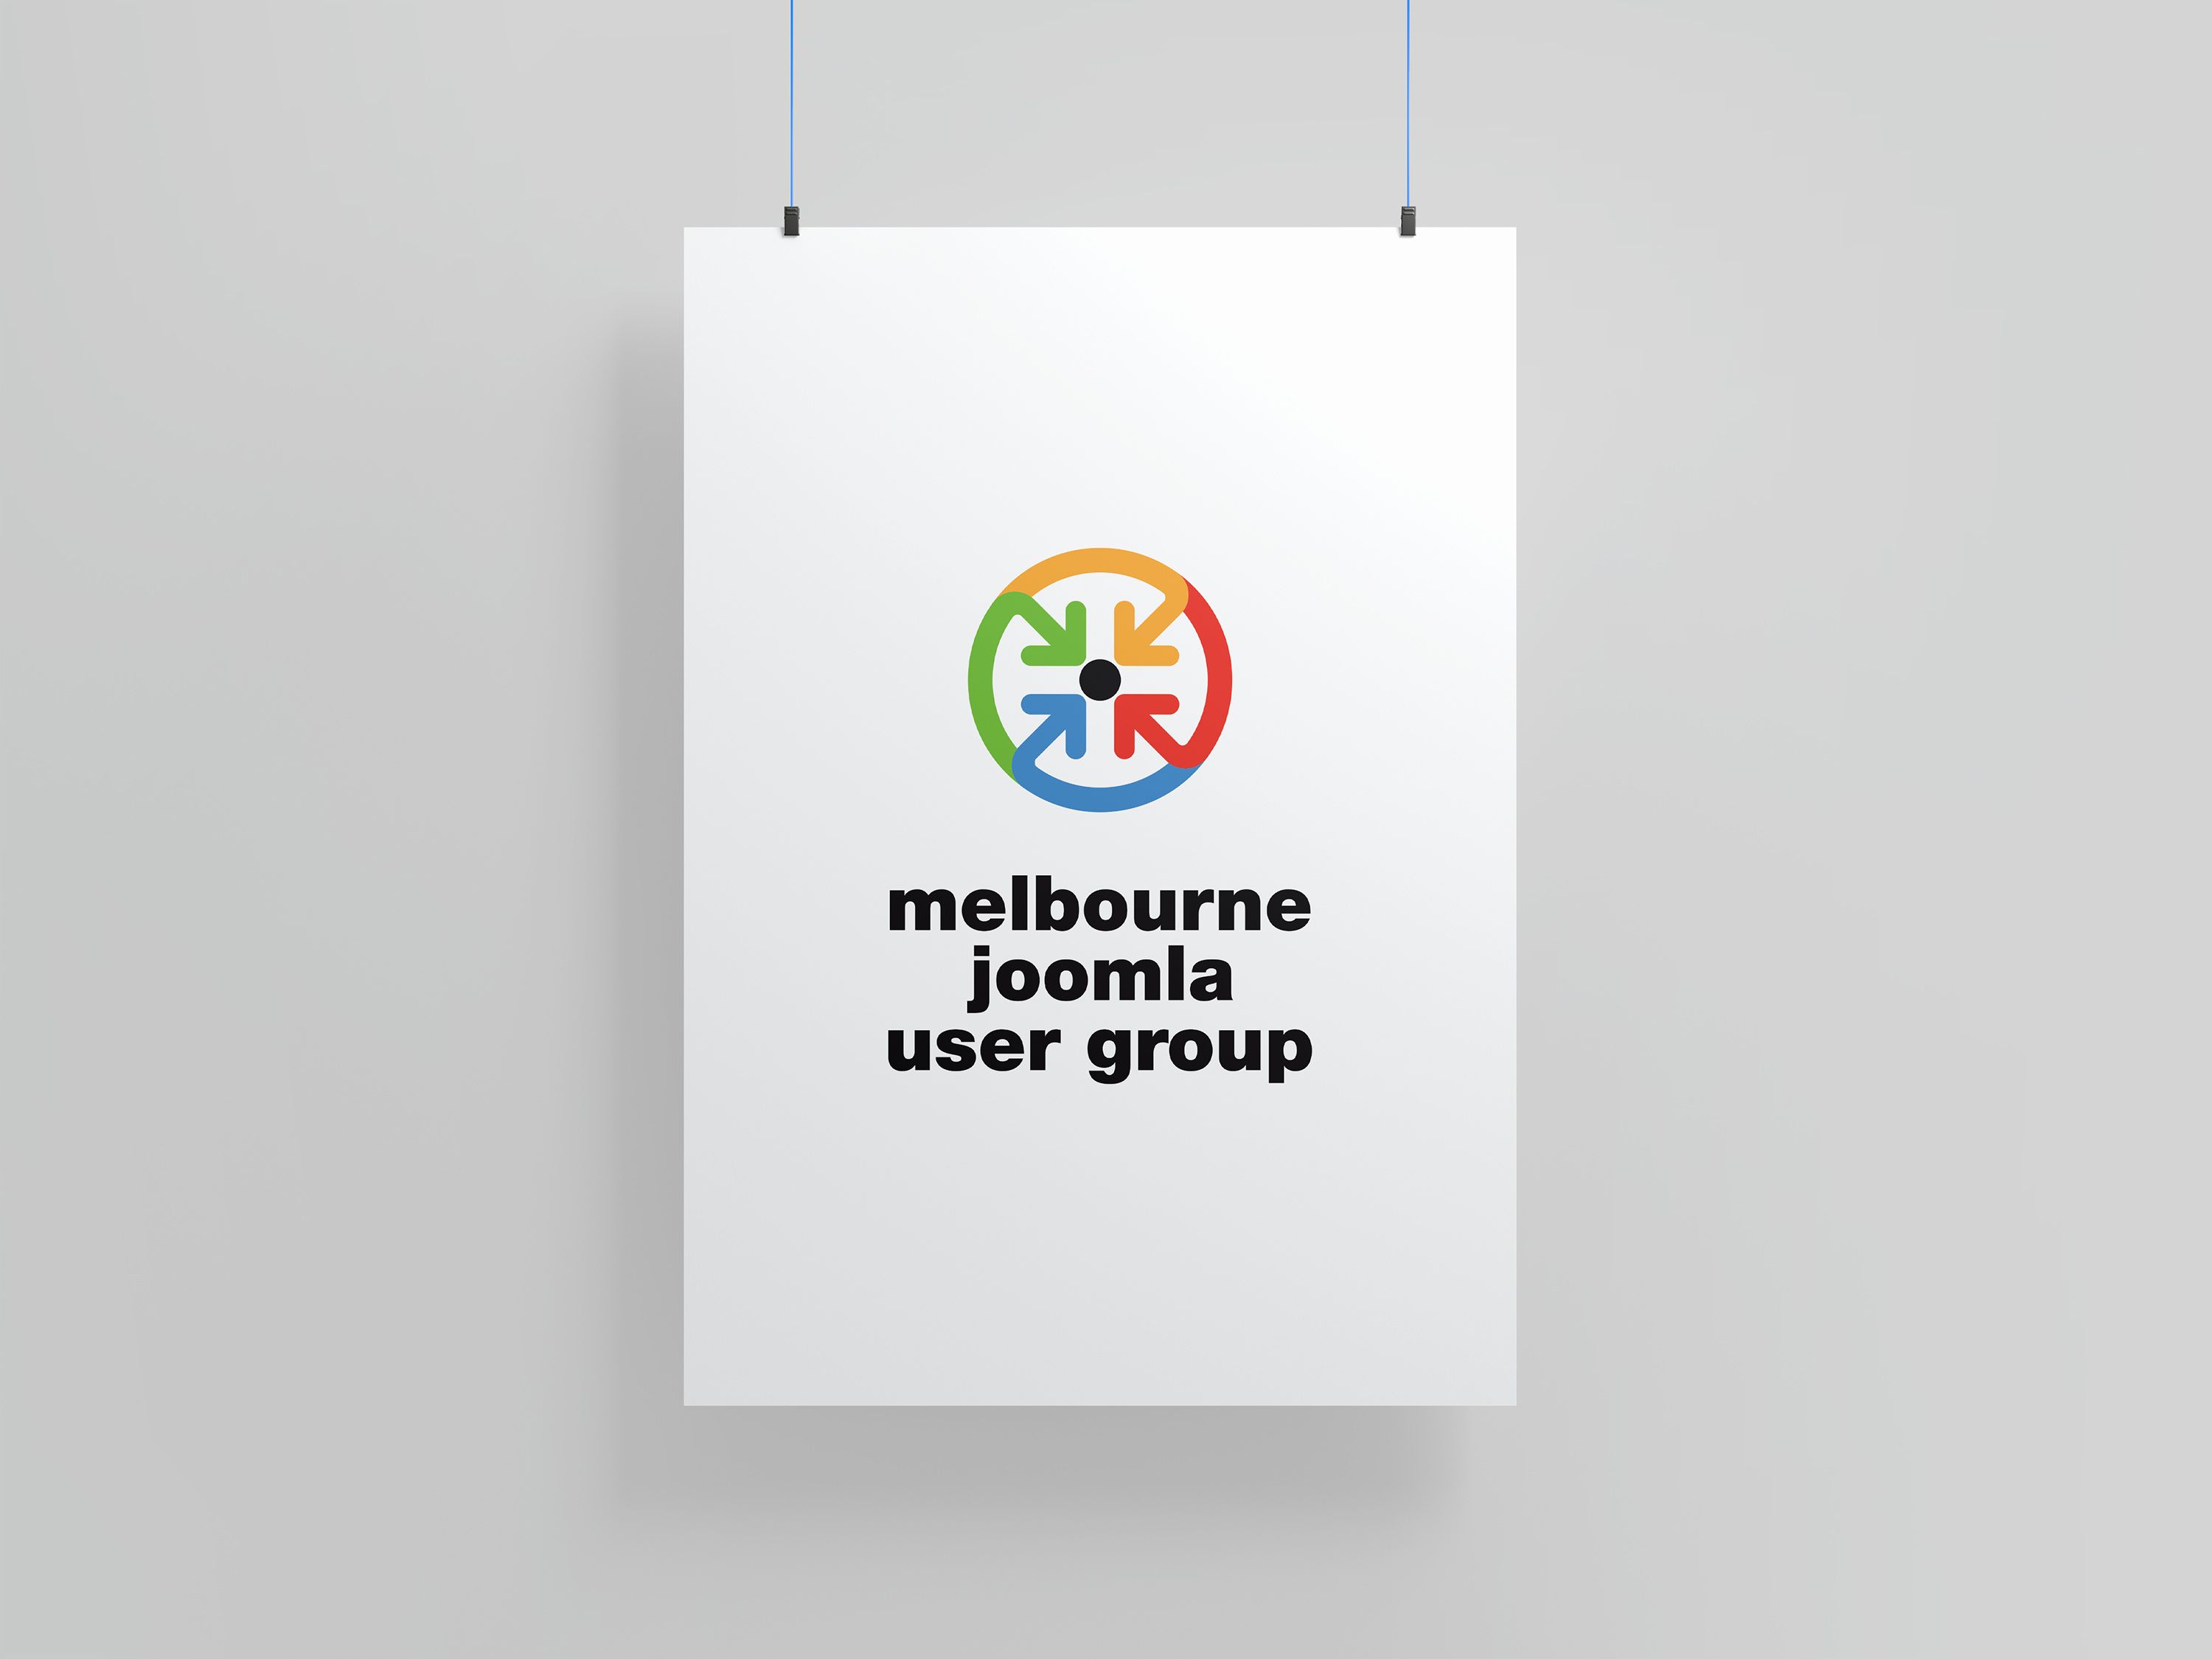 Melbourne Joomla User Group colour logo version